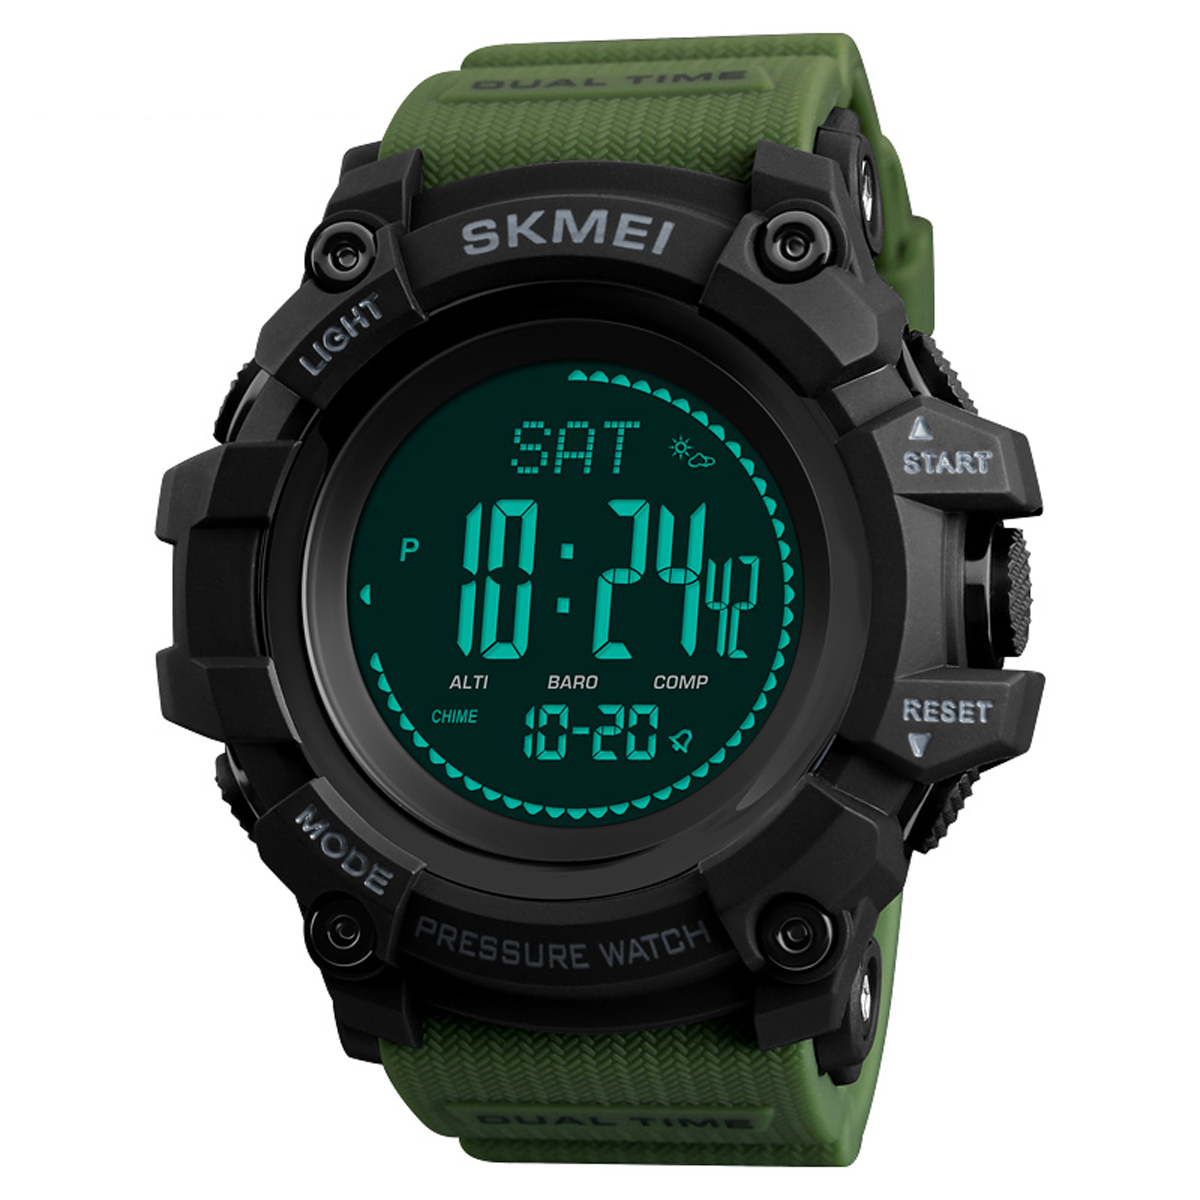 SKMEI 1358 3ATM Waterproof Smart Watch Pedometer Barometer - Green Colour